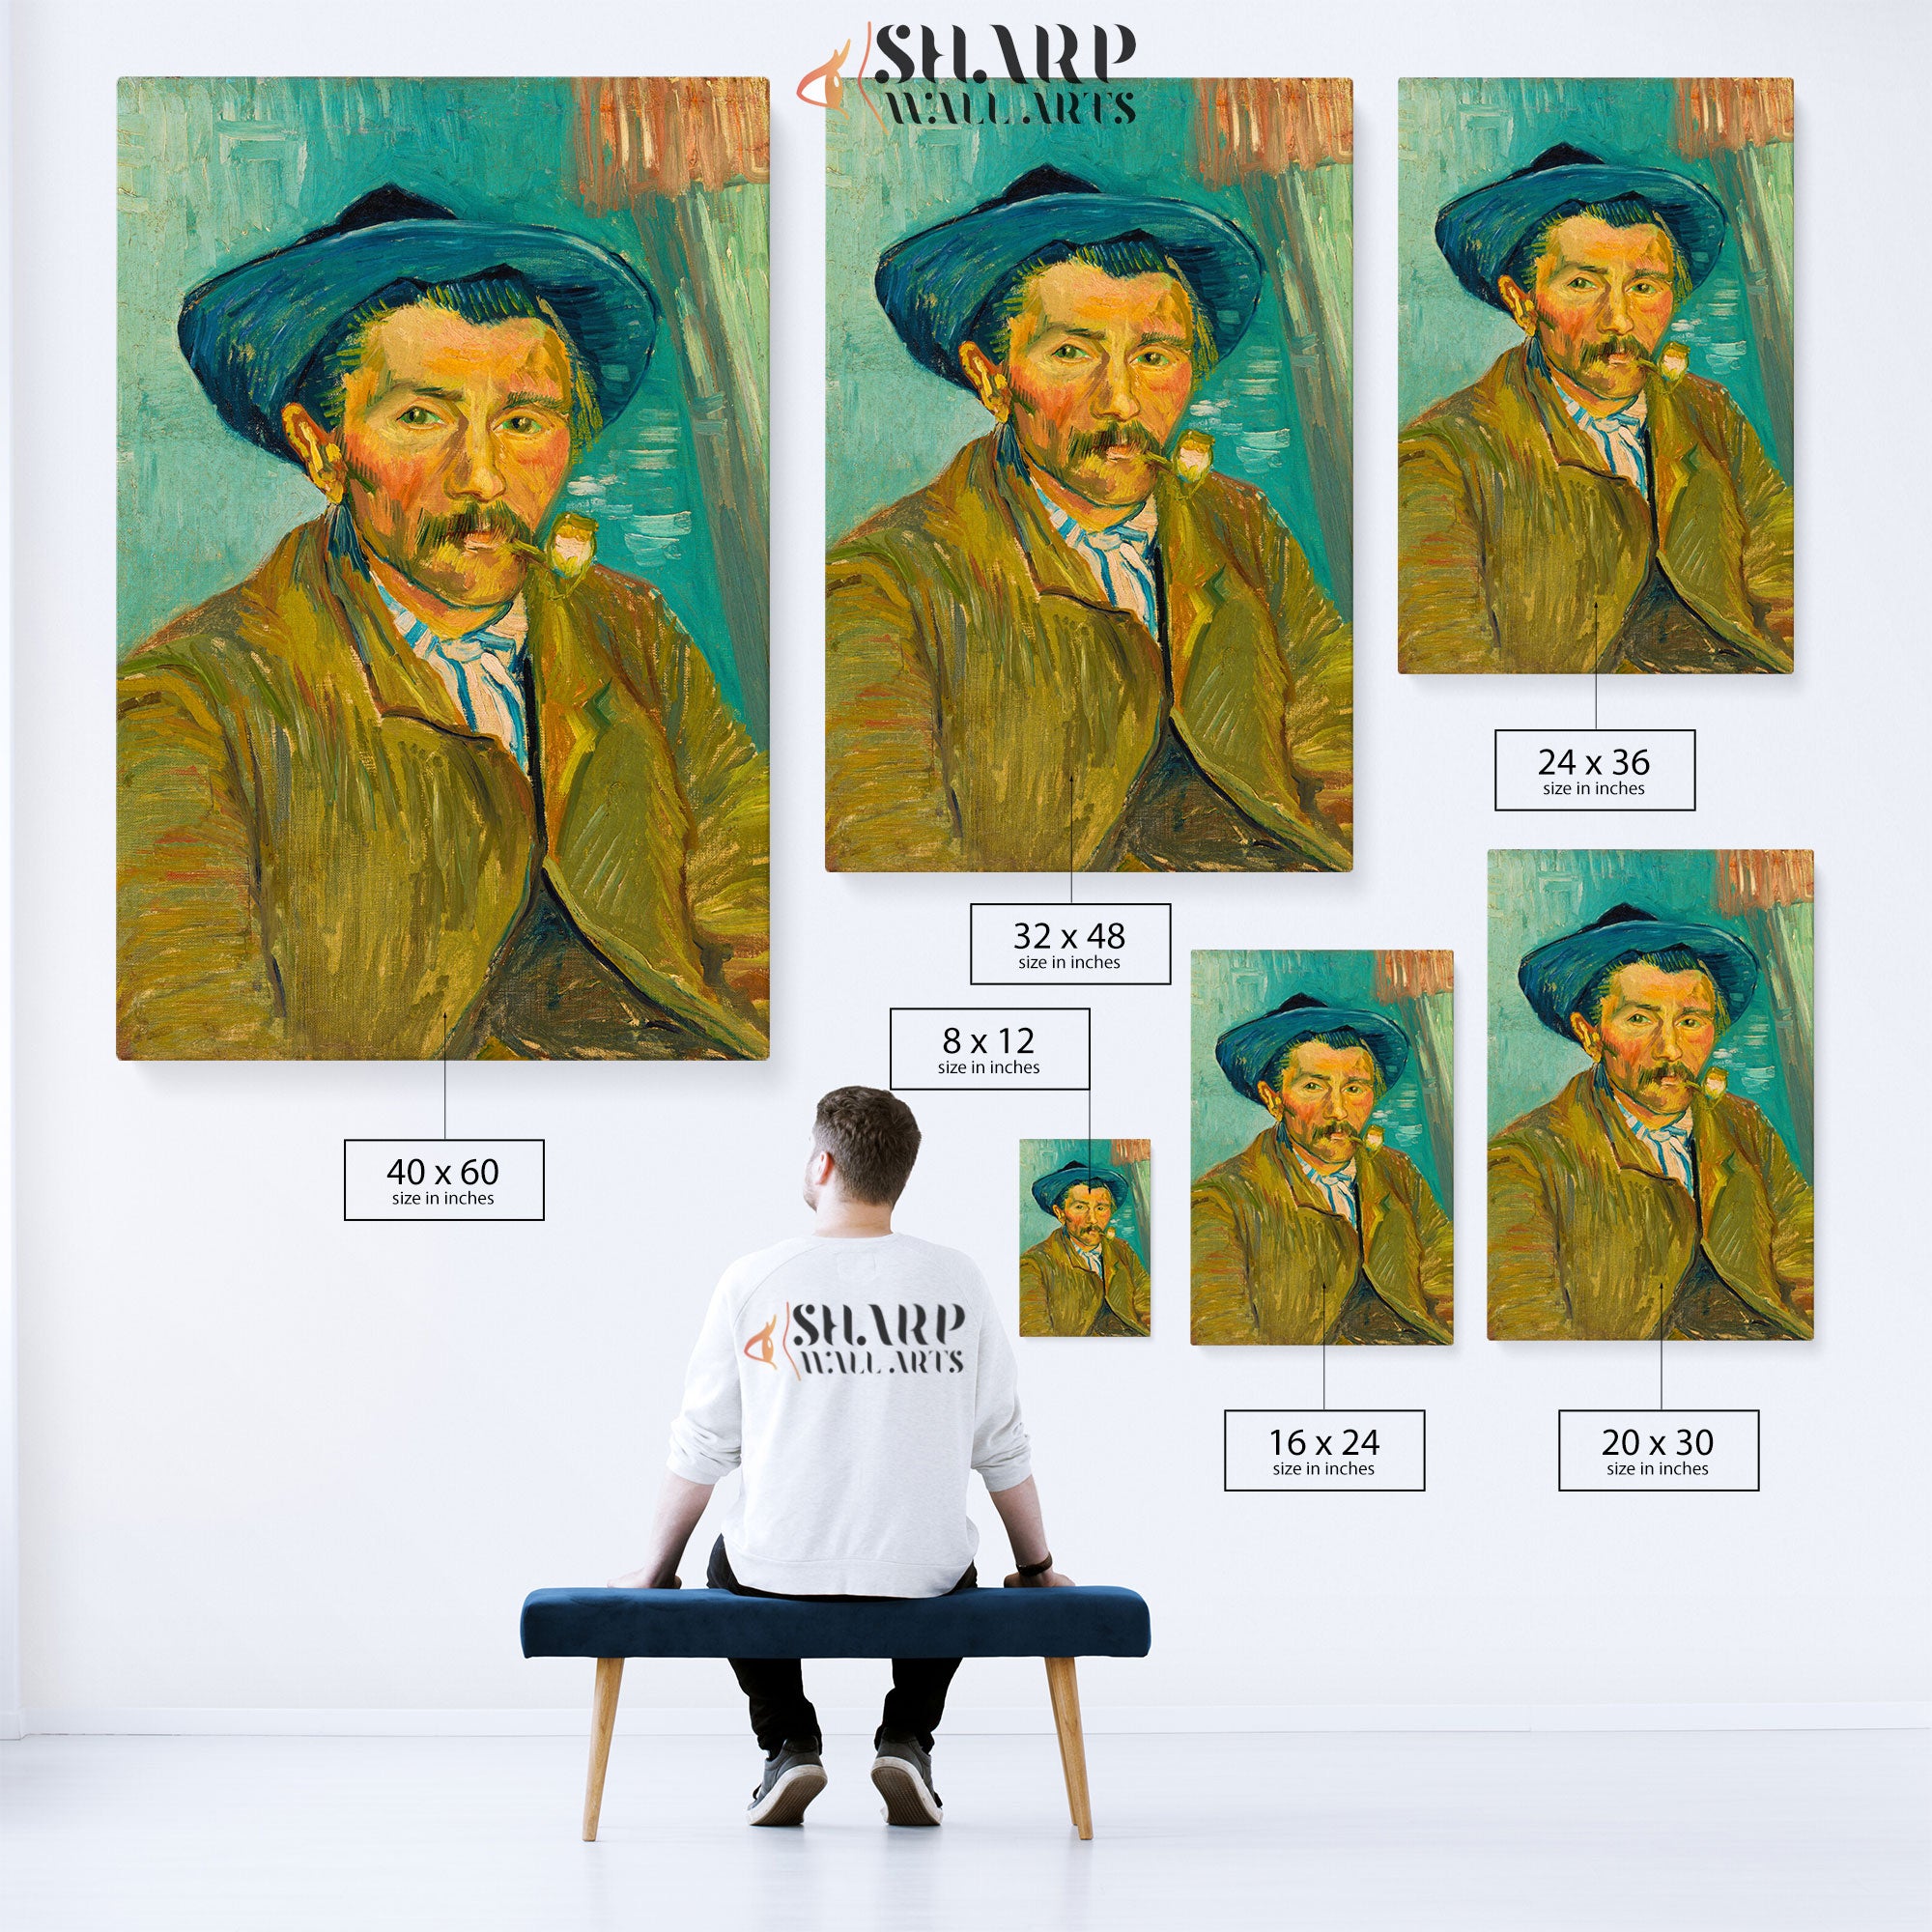 Vincent van Gogh The Smoker Canvas Wall Art